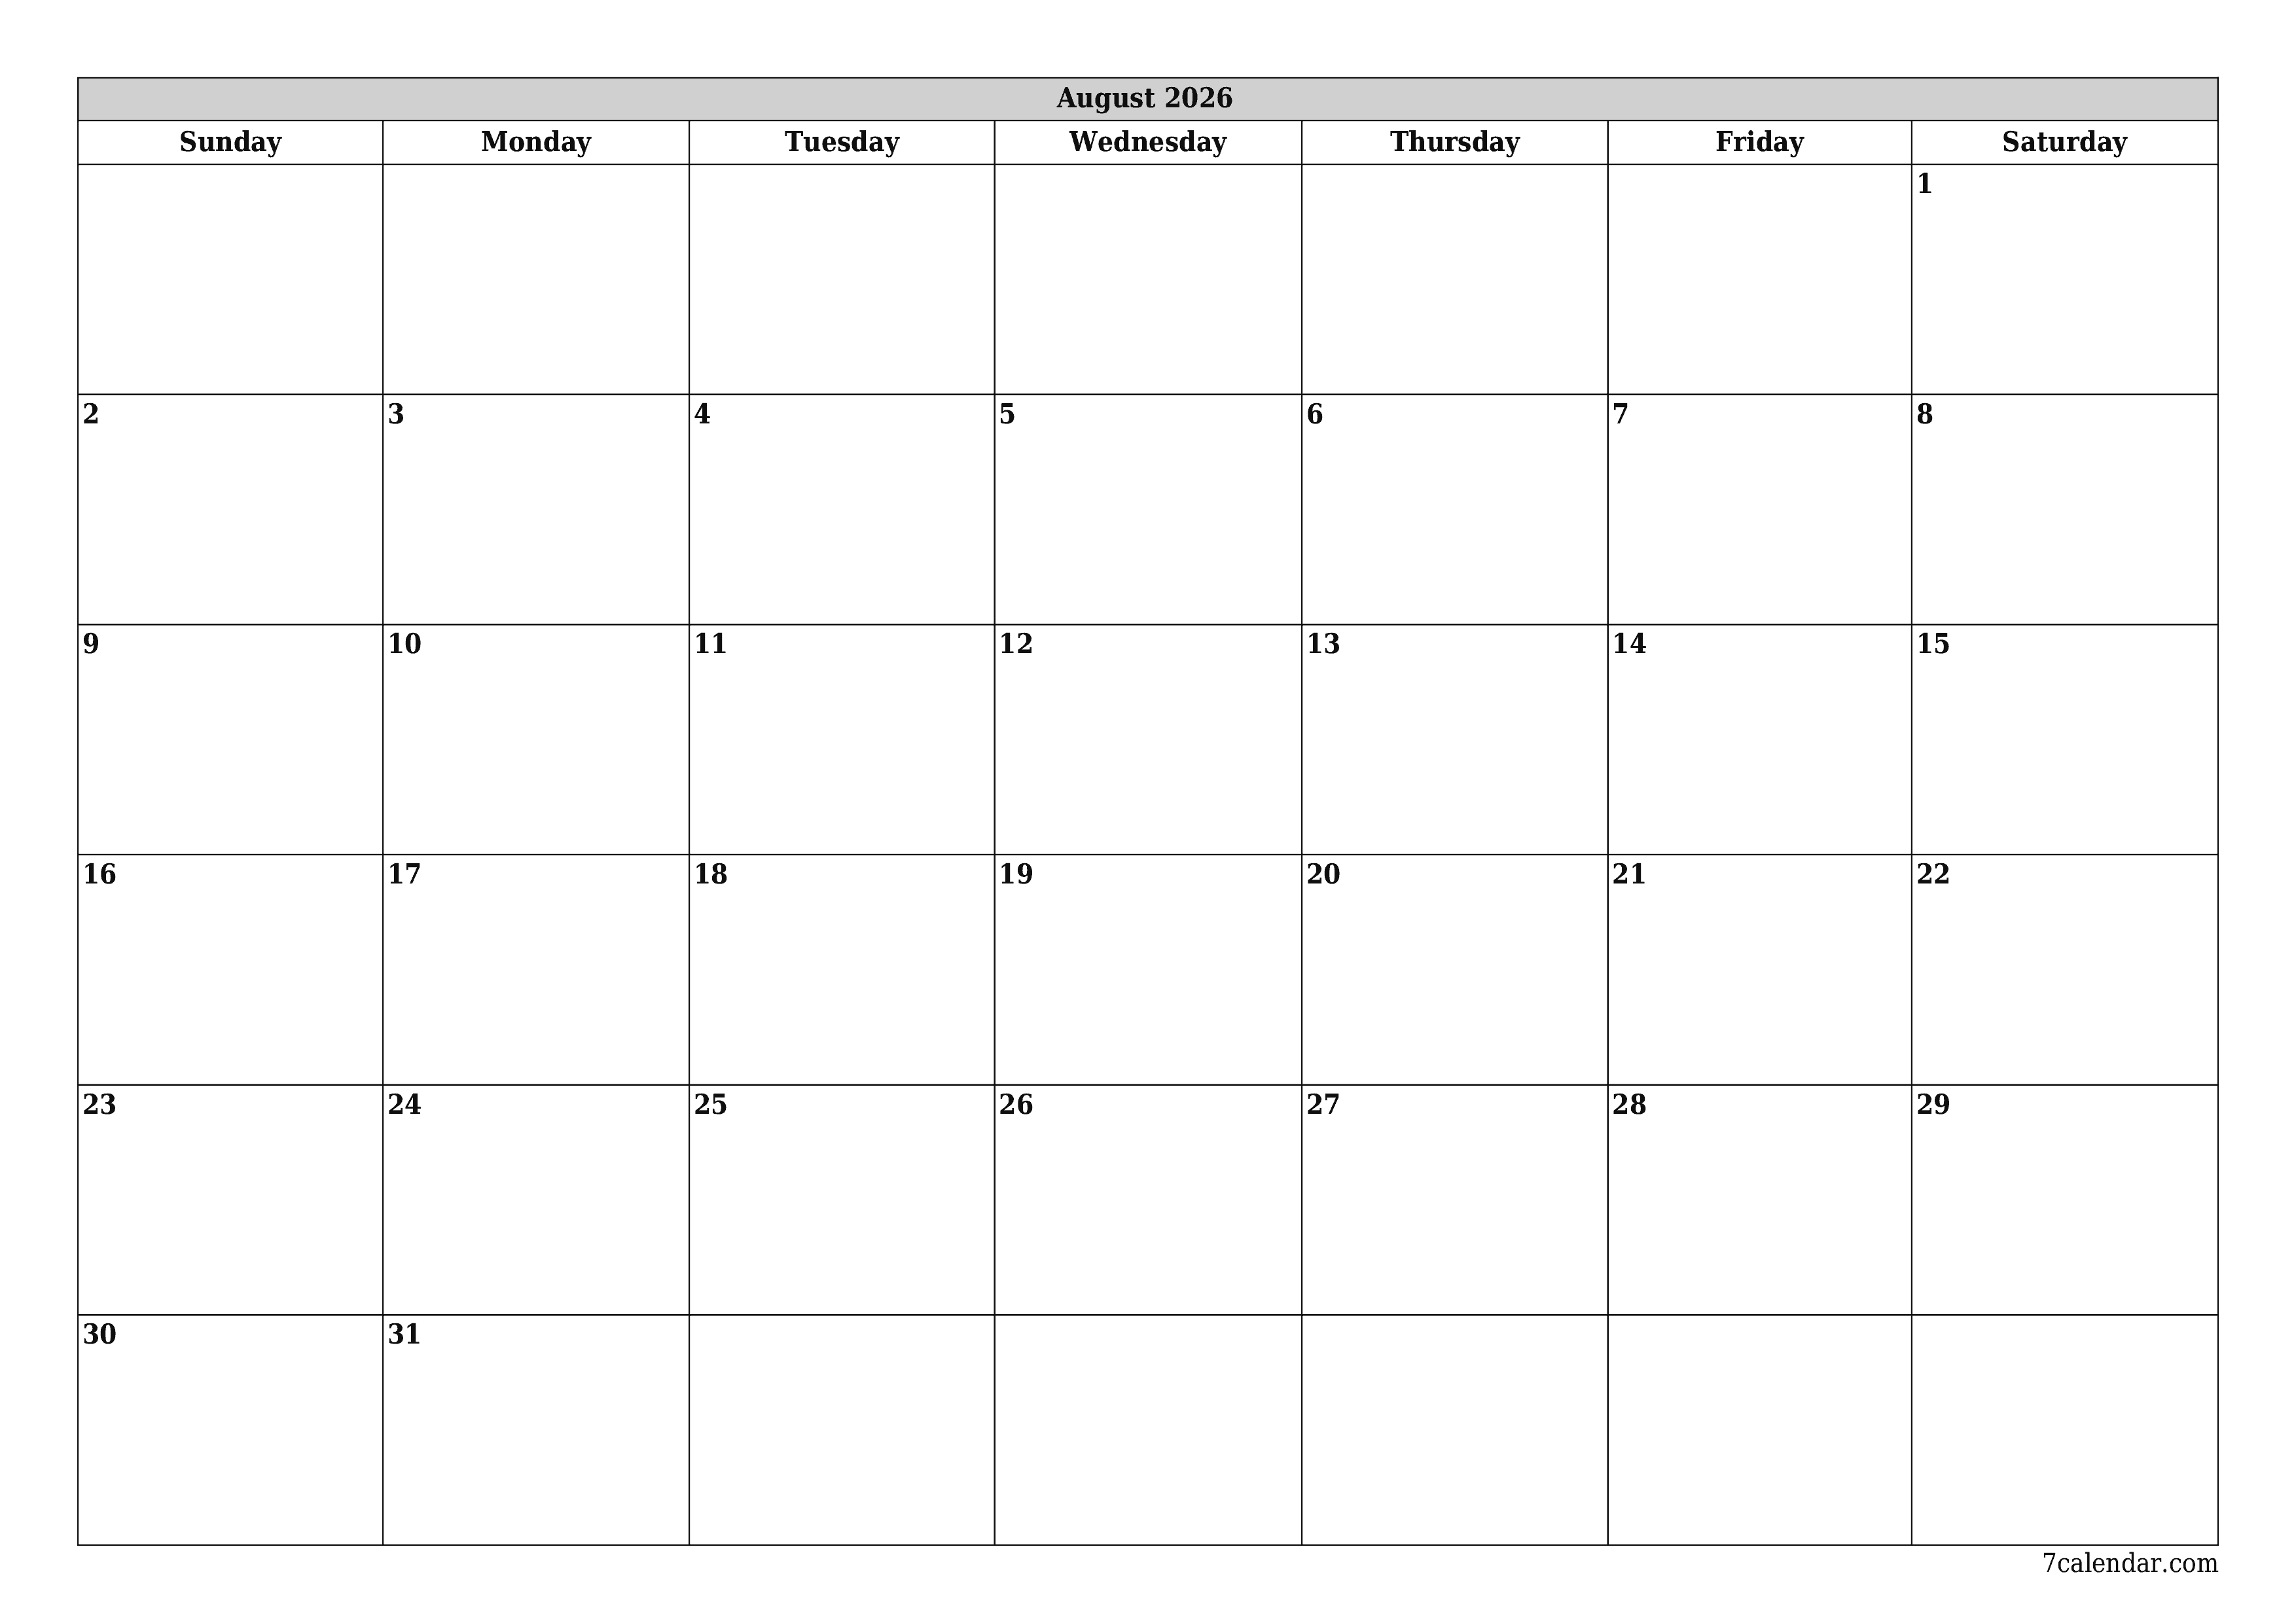 Blank calendar August 2026